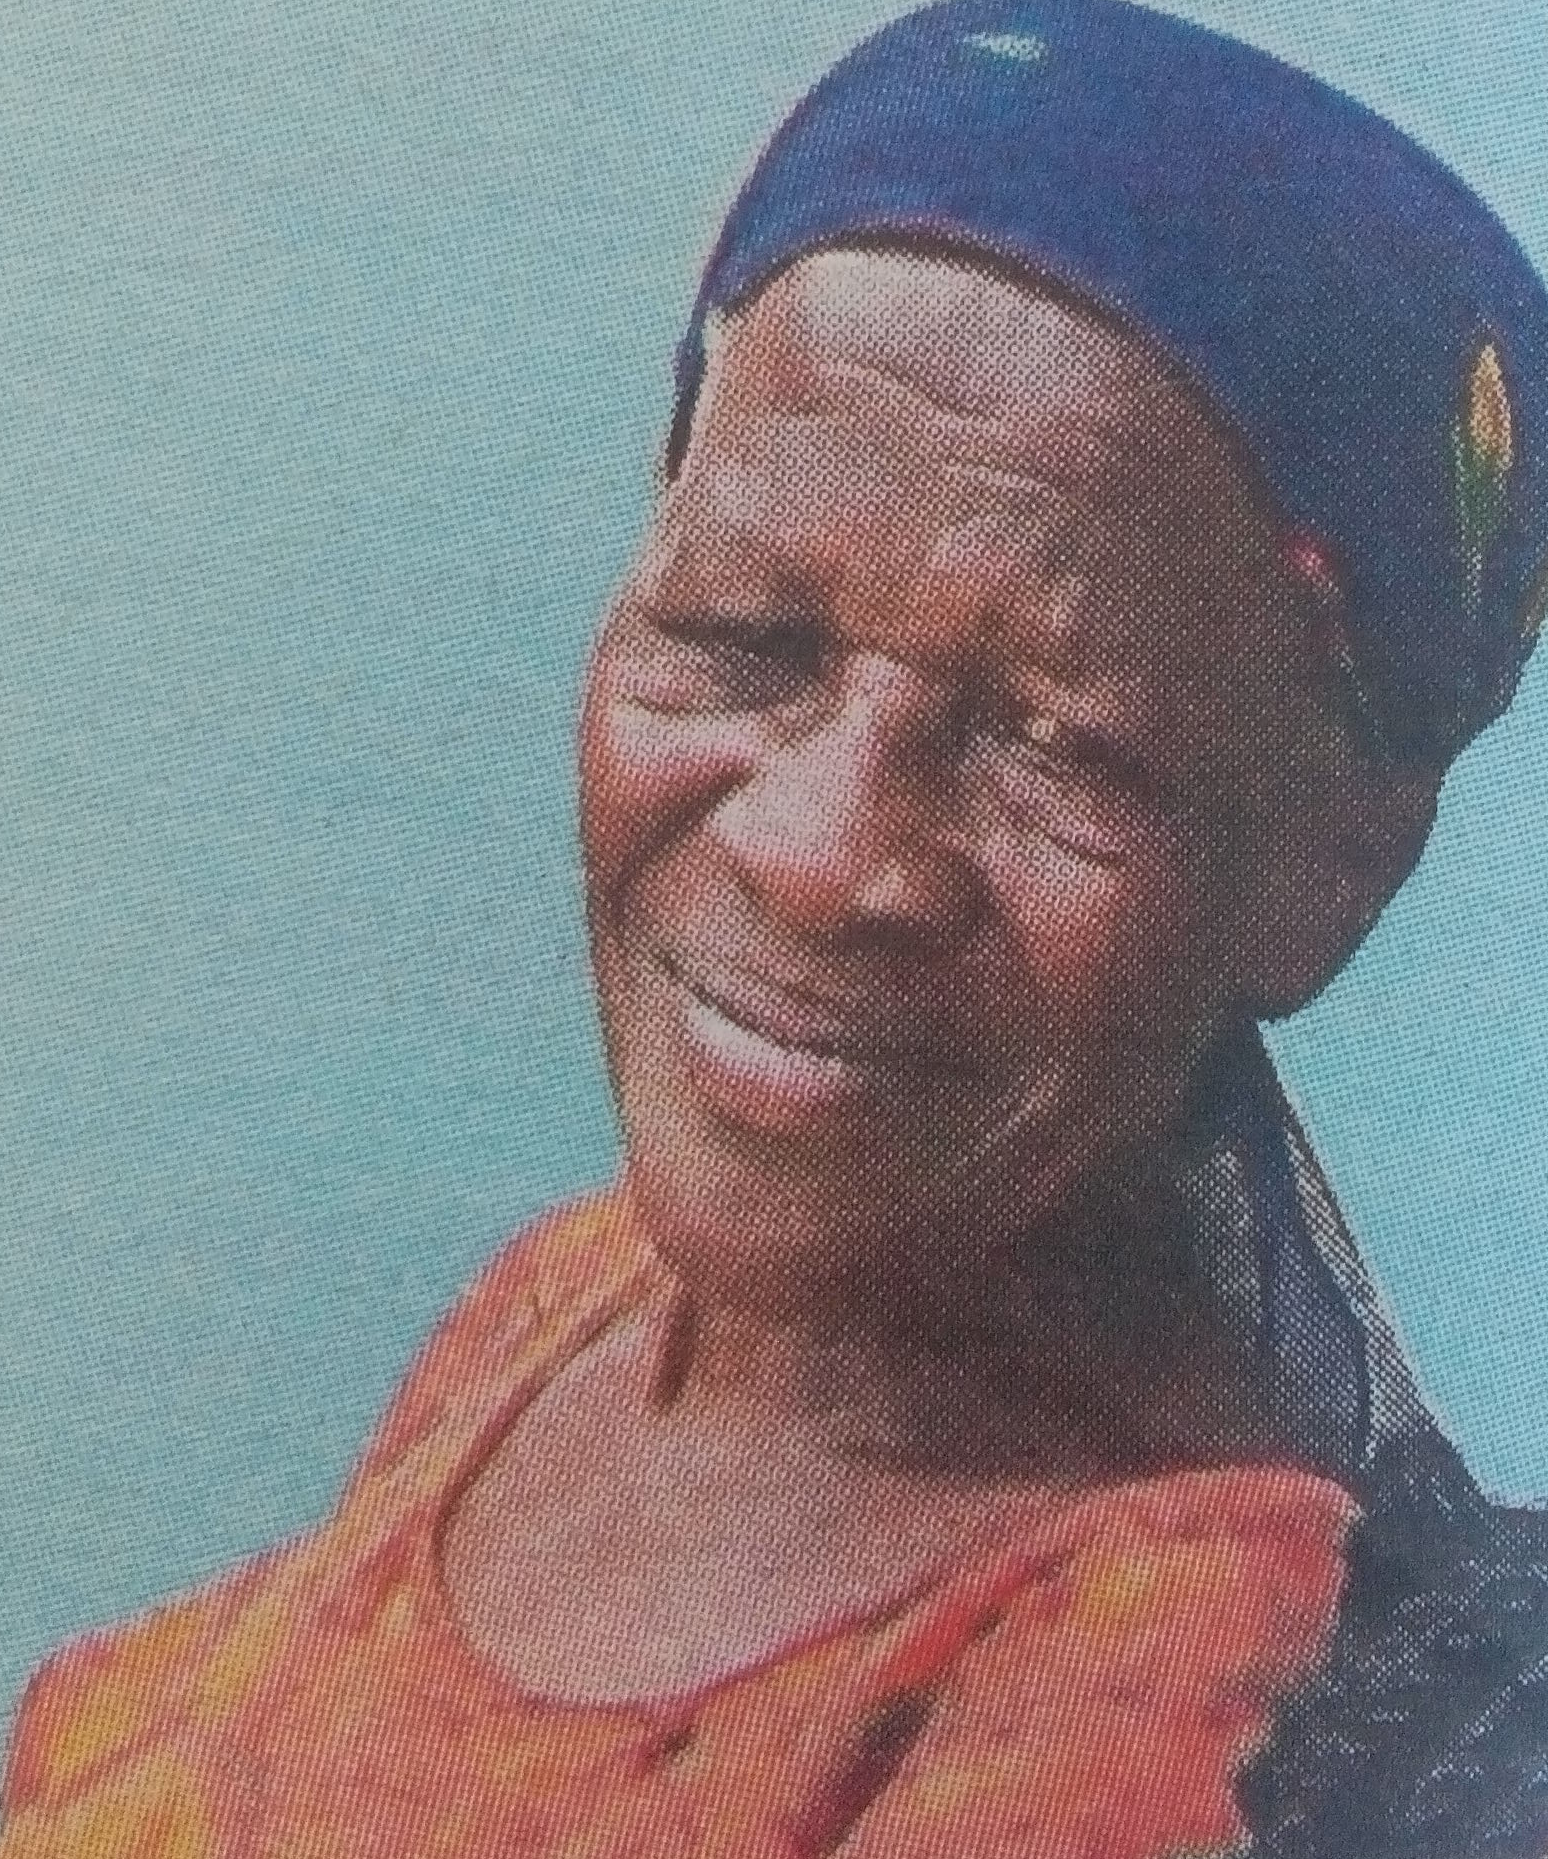 Obituary Image of Grace Oluoch Auma